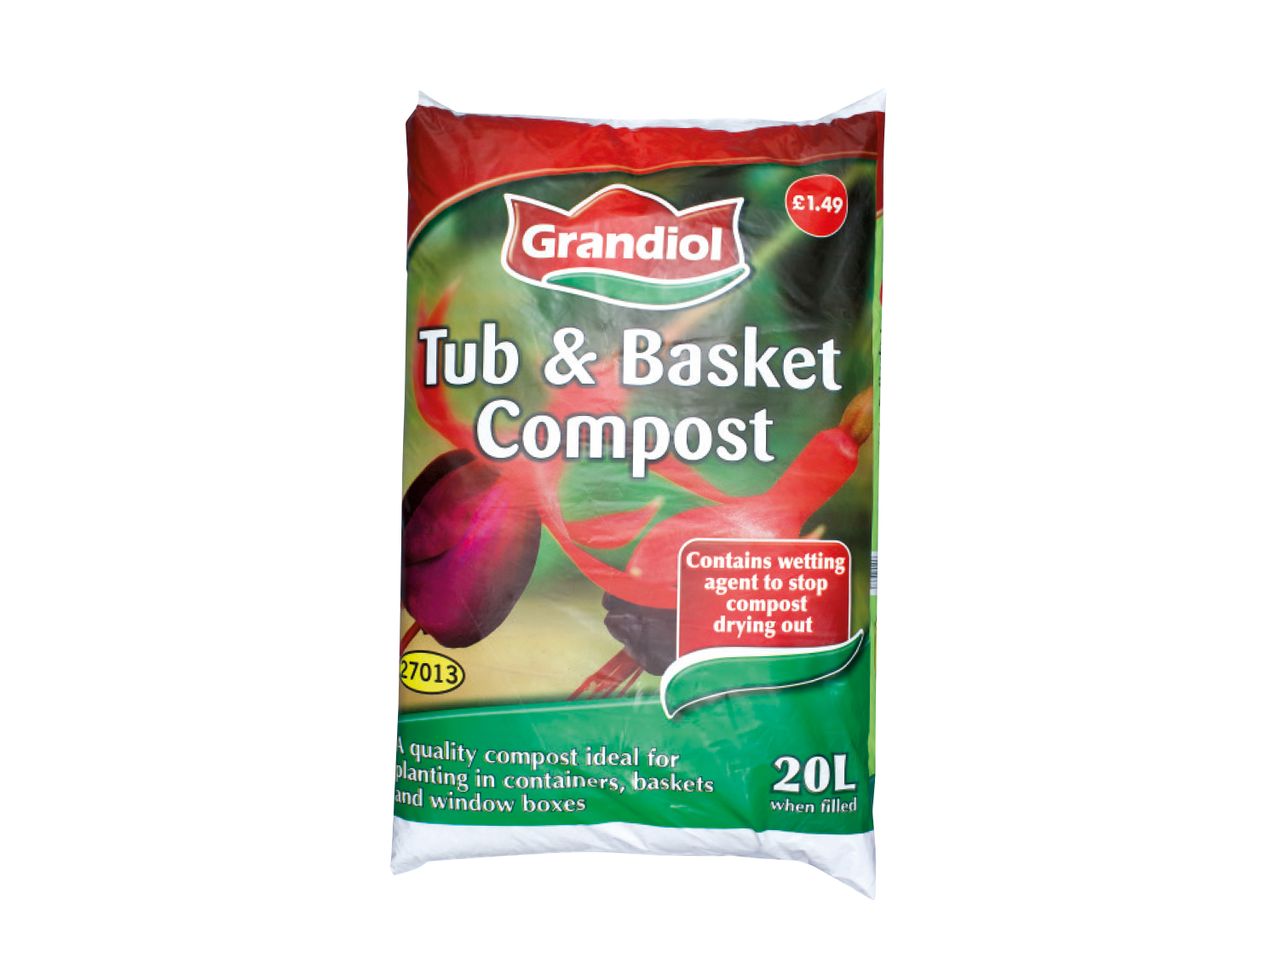 Go to full screen view: Grandiol Tub & Basket Compost 20L - Image 1